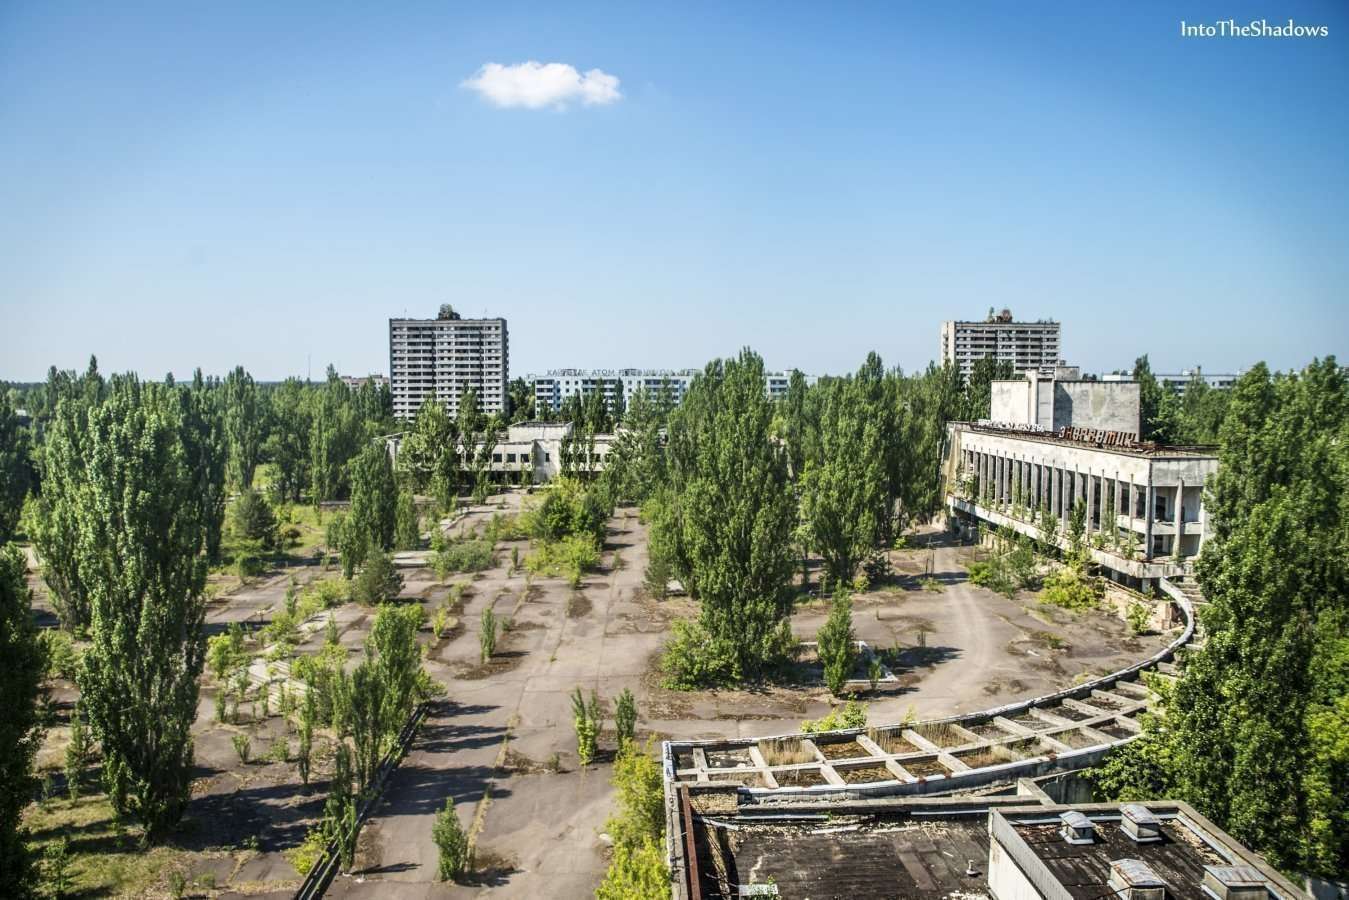 Voyage dans la zone de Tchernobyl et Pripyat en Ukraine :: Informations, photos
